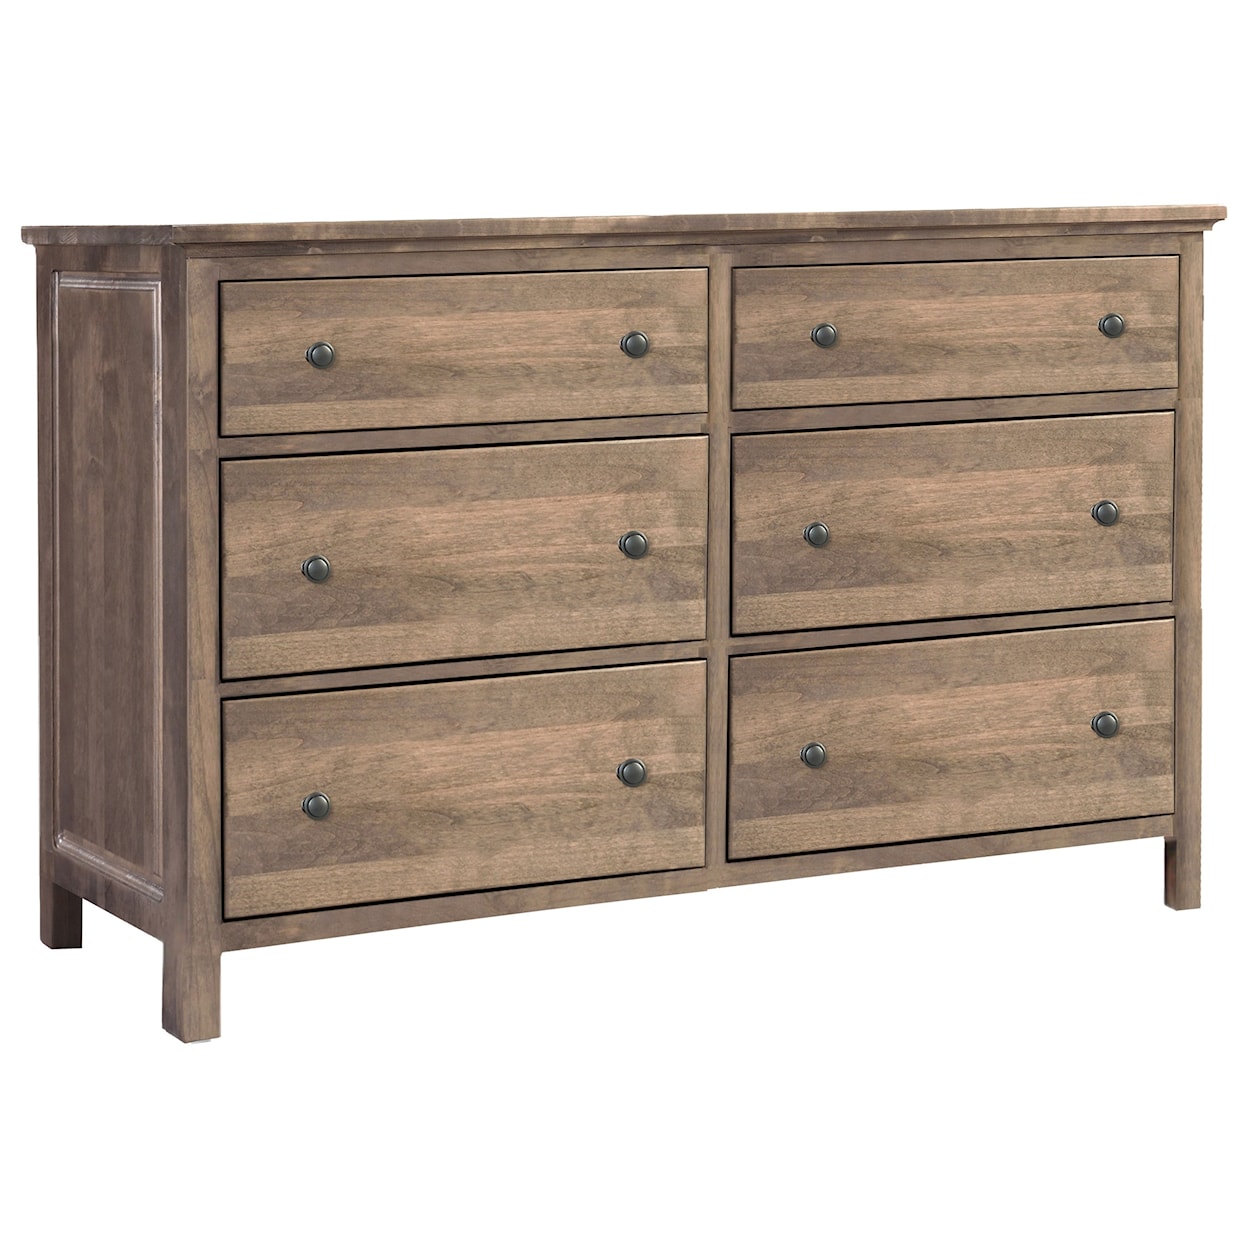 Archbold Furniture Heritage 6 Drawer Double Dresser